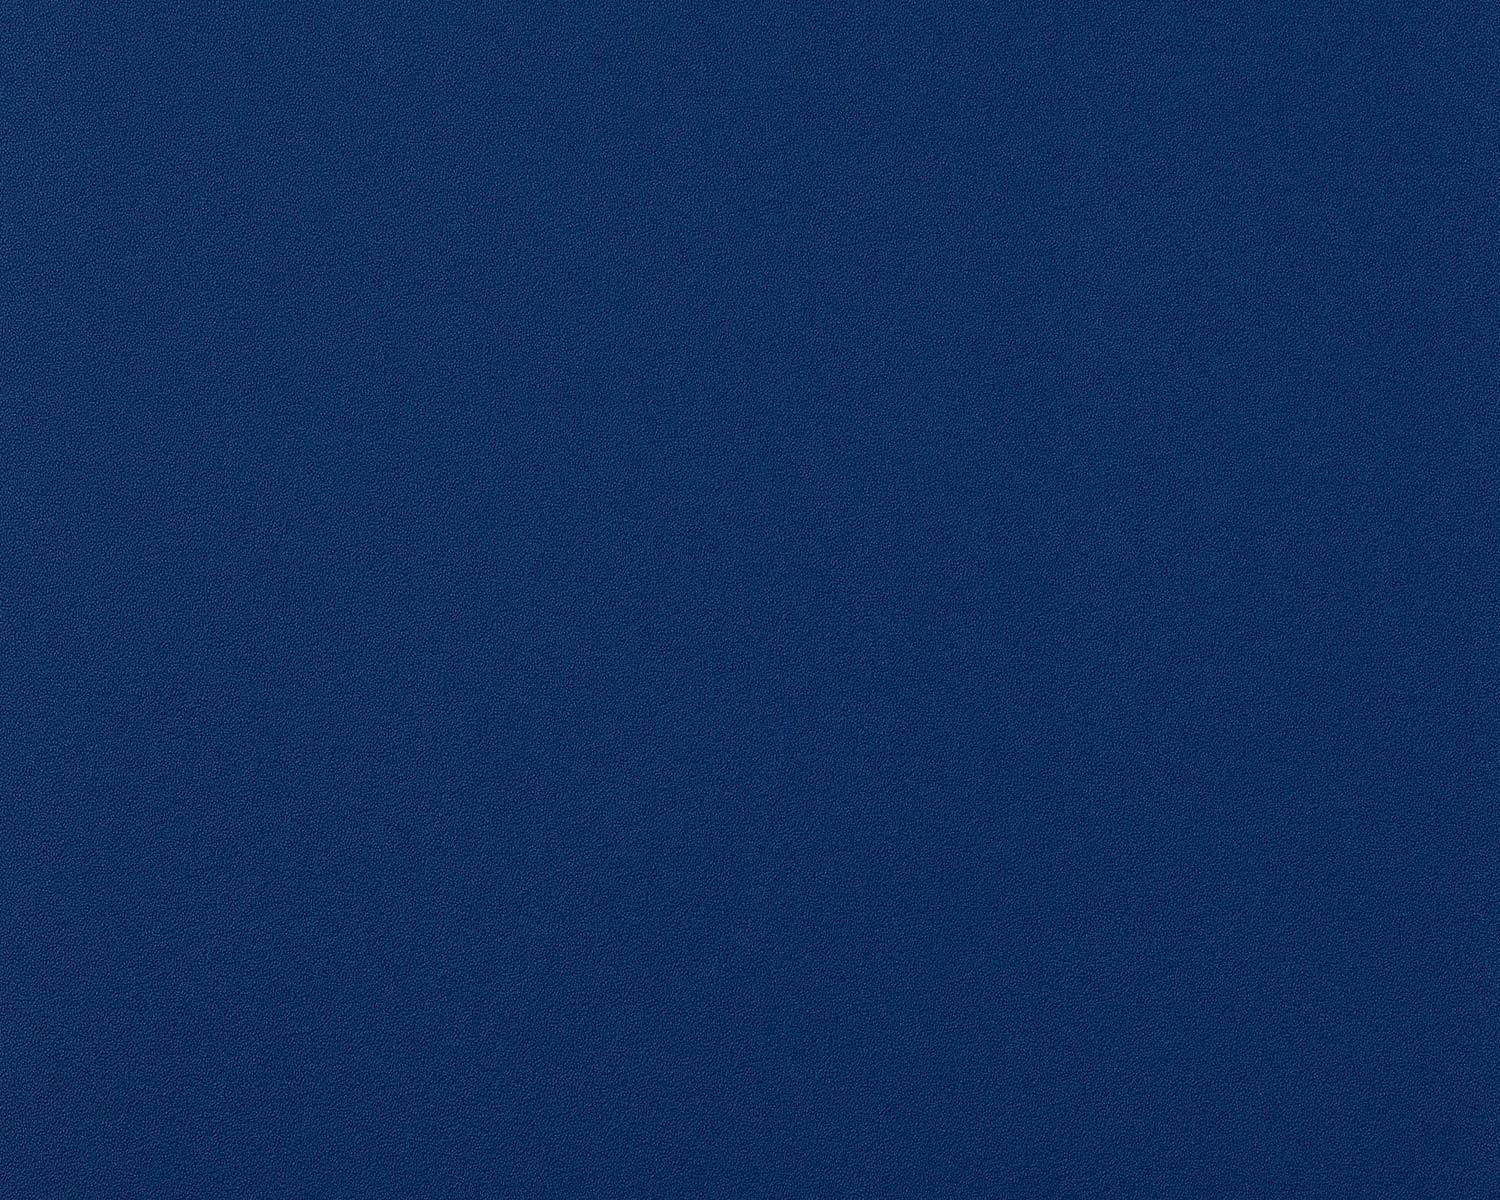 Plain Navy Blue Image Wallpaper